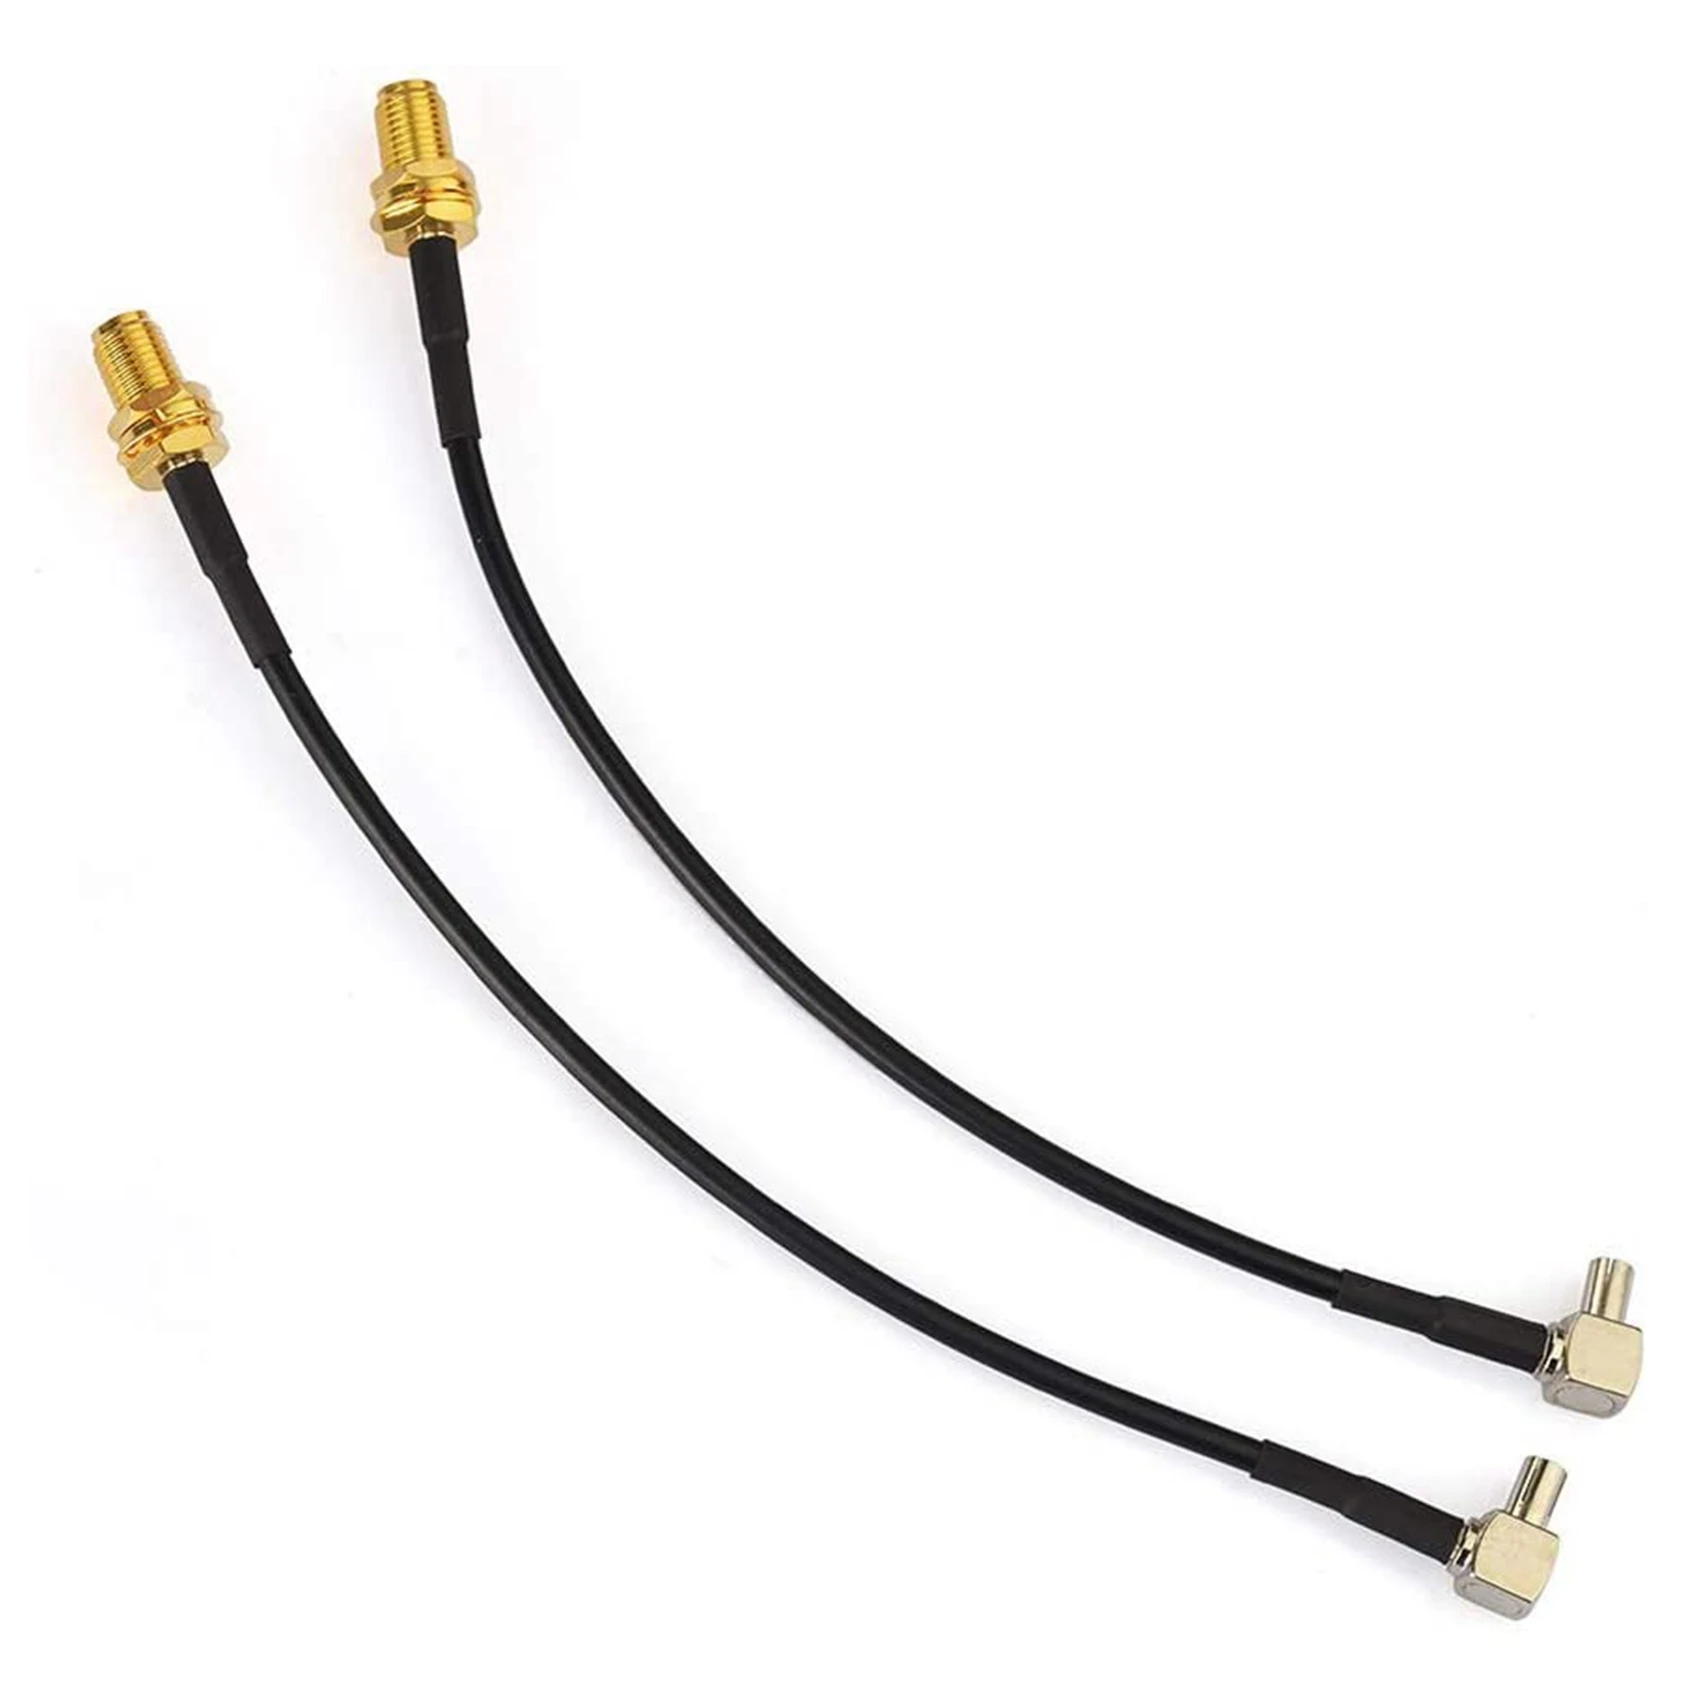 

4G антенна SMA разъем к TS9 штекеру Адаптерный кабель 15 см 2 шт. для внешней антенны маршрутизатор Huawei E5372 E5577 E5786 E5787